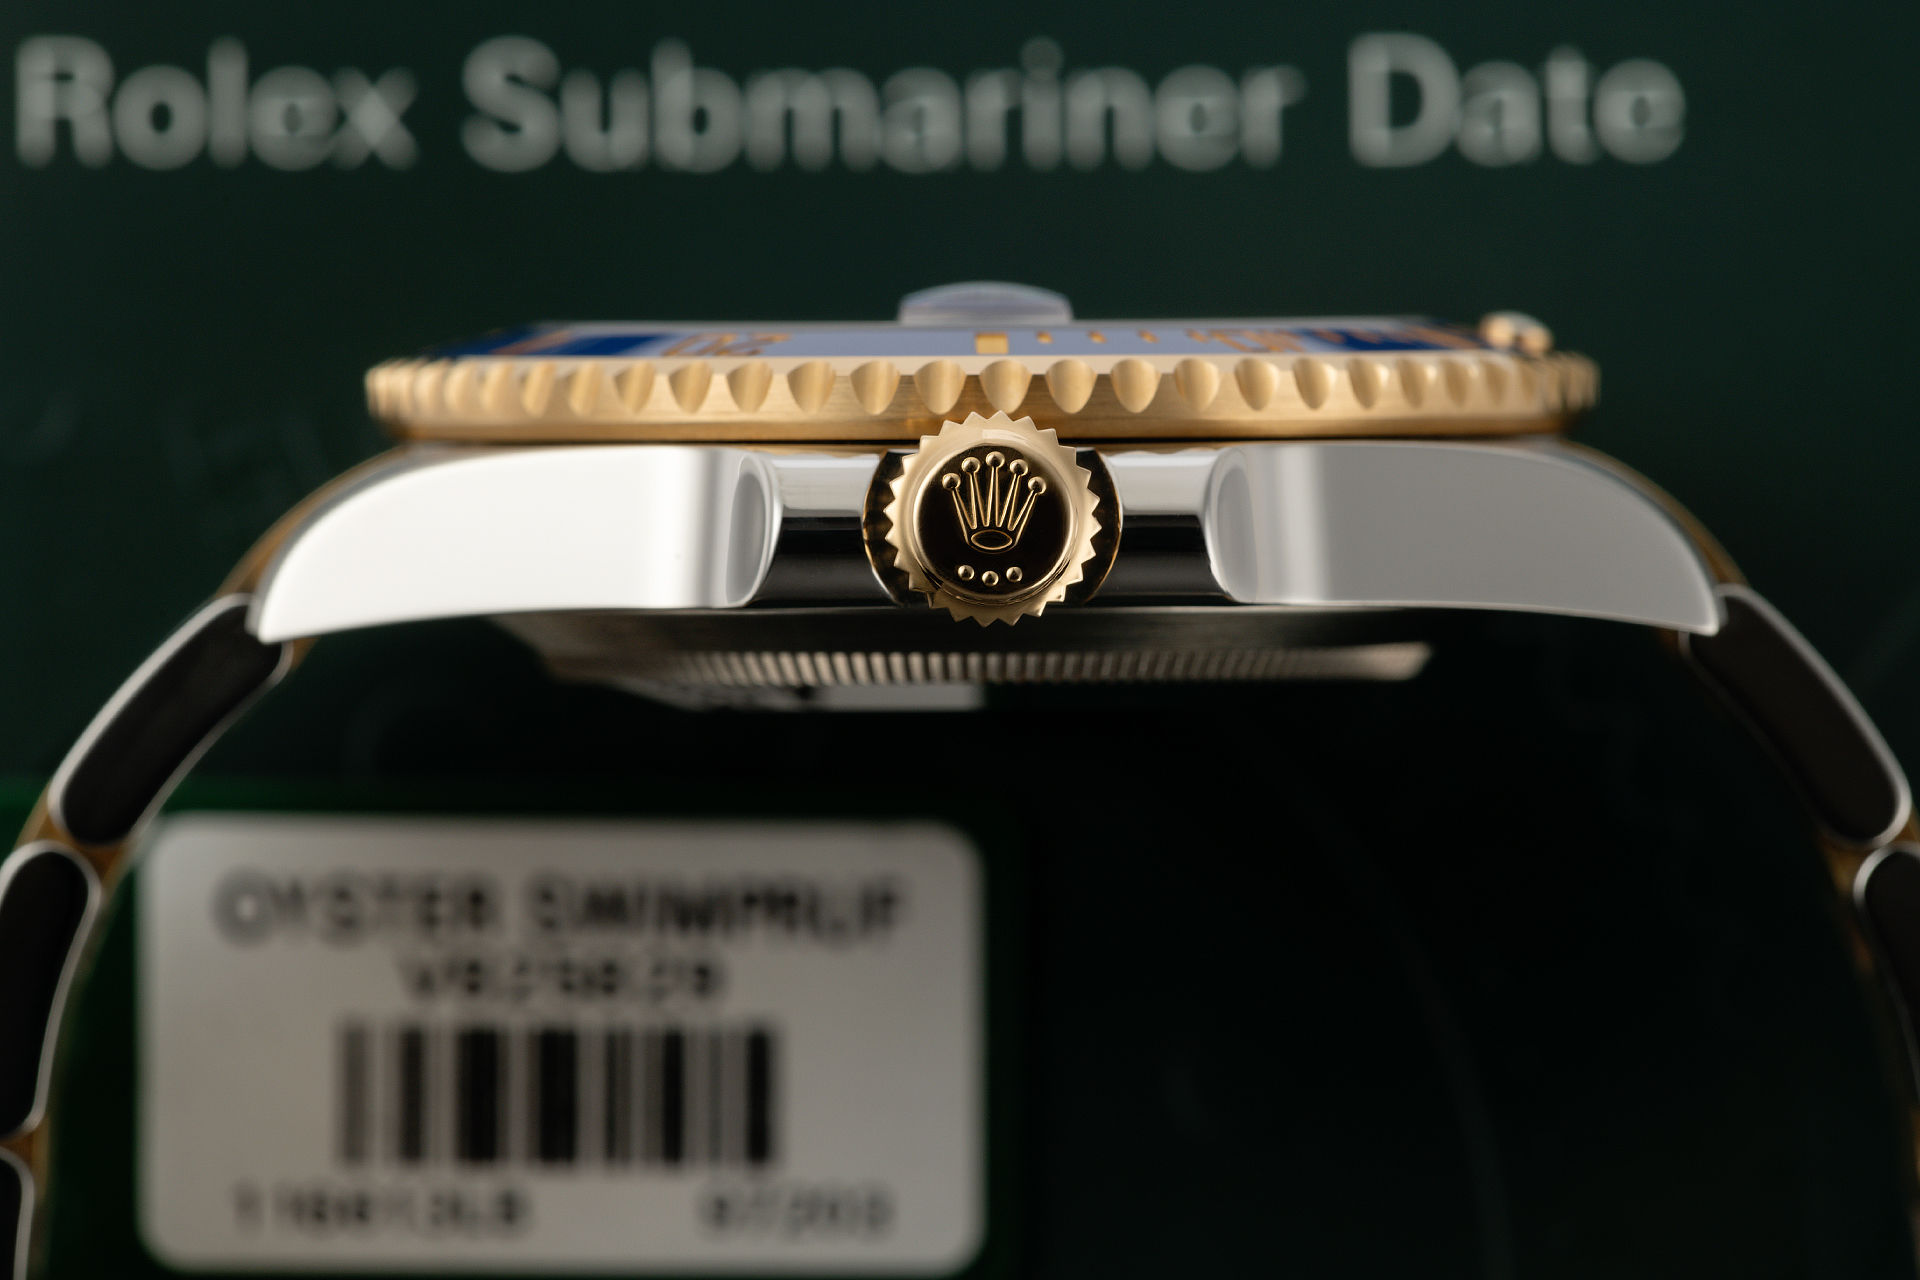 Steel & Gold 'Latest Model' | ref 116613LB | Rolex Submariner Date